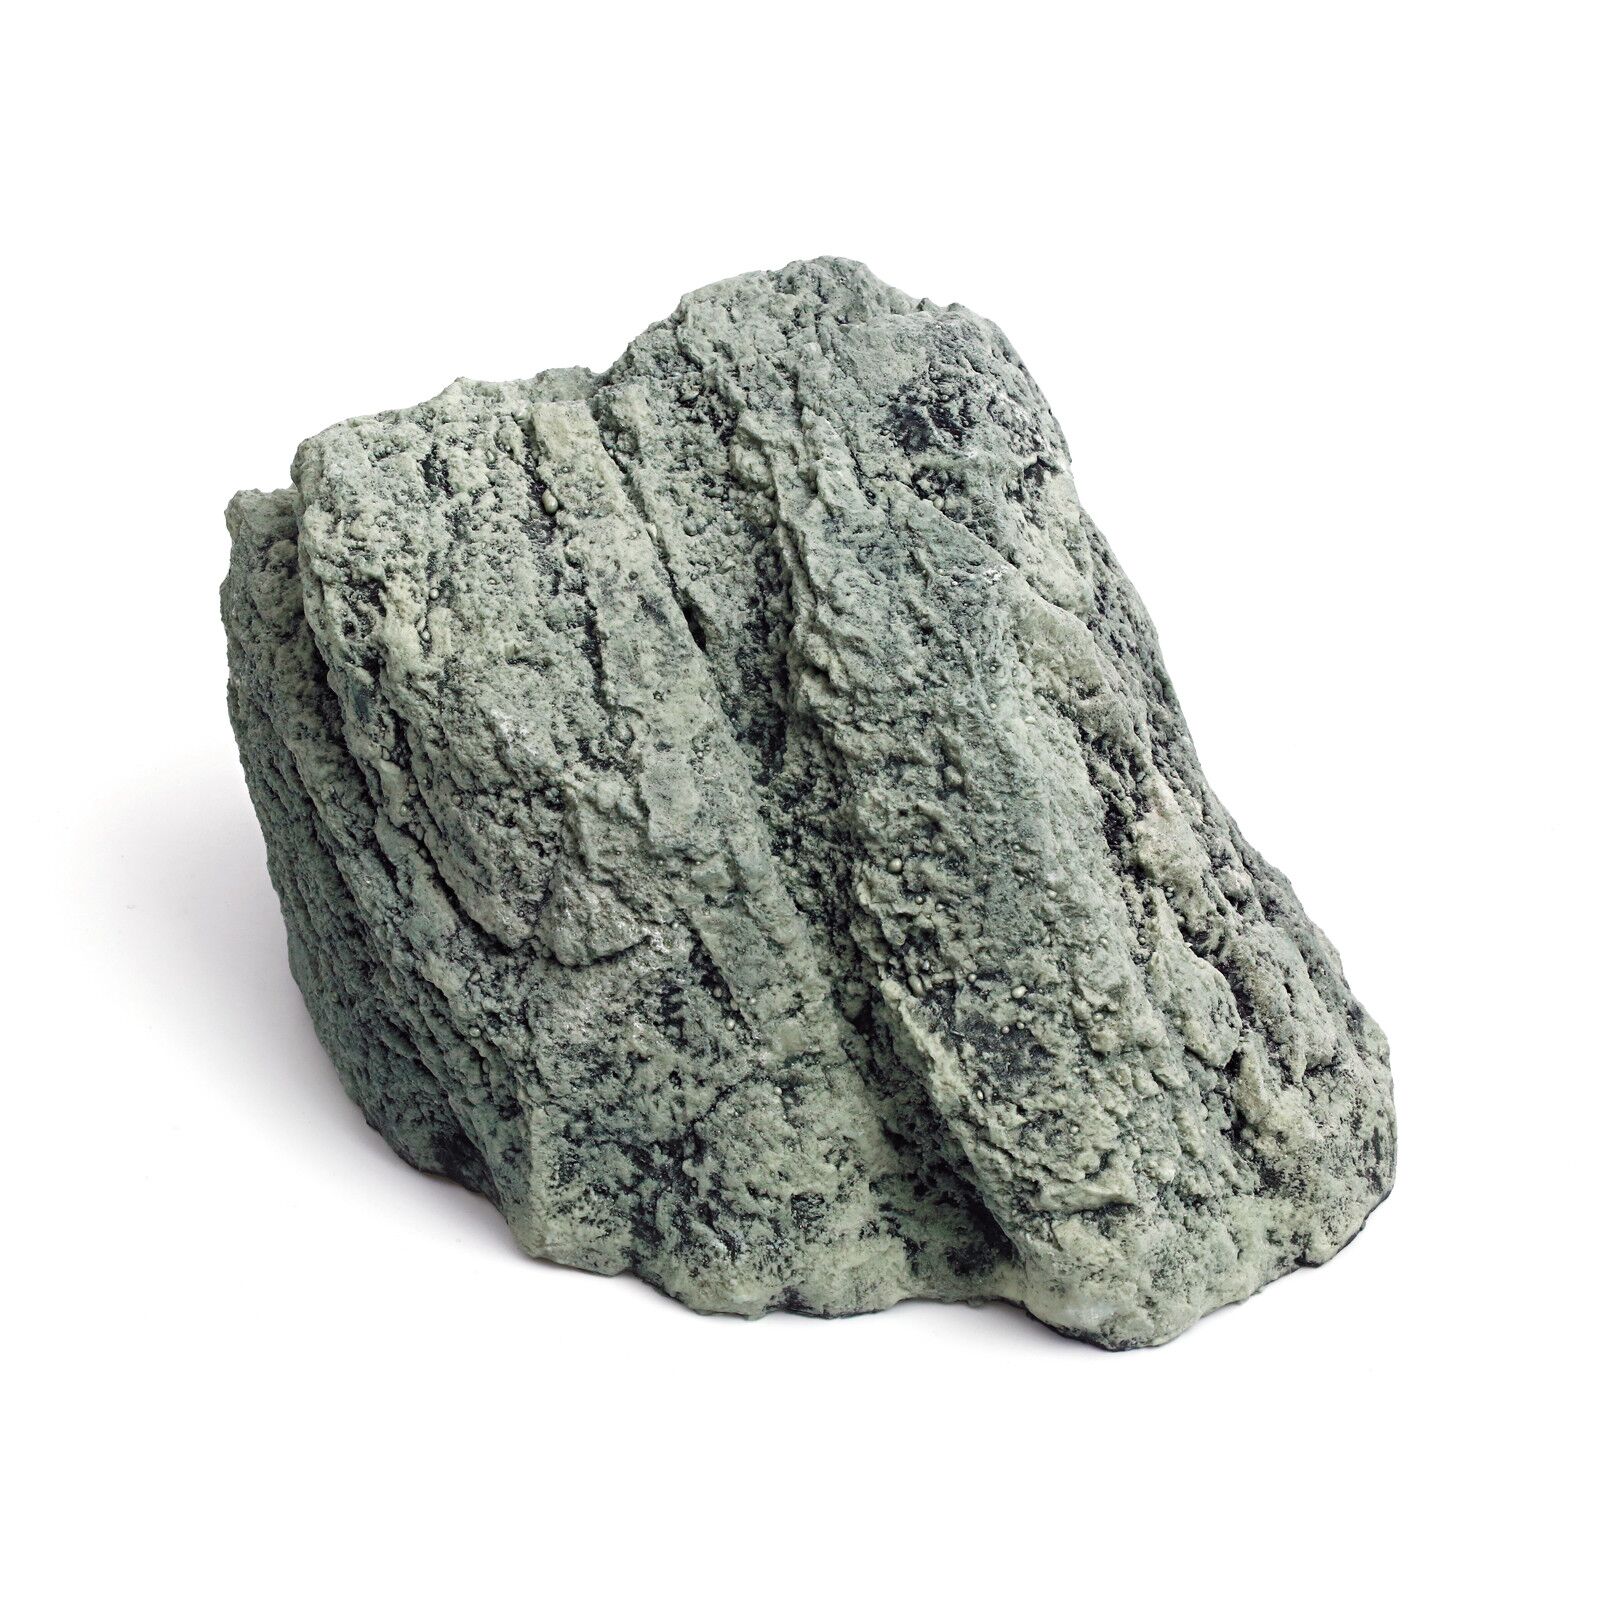 Naturally Green river stones 10Kg Regular Asymmetrical Rock Stone